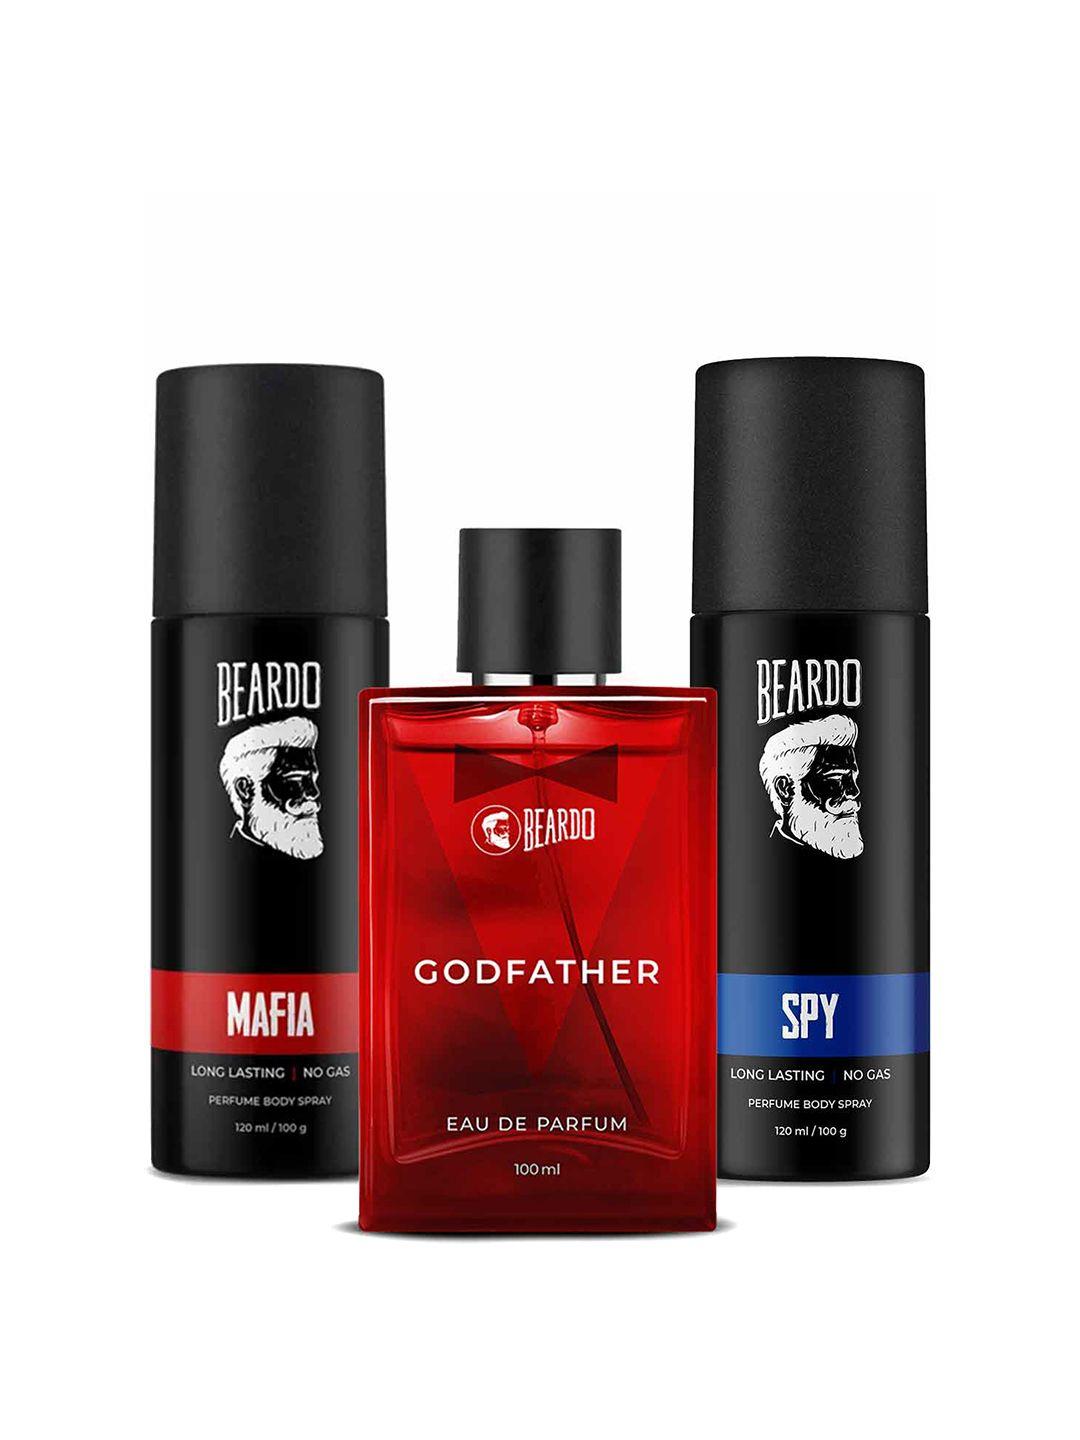 beardo men godfather eau de parfum 100ml with mafia & spy no gas body sprays - 100g each